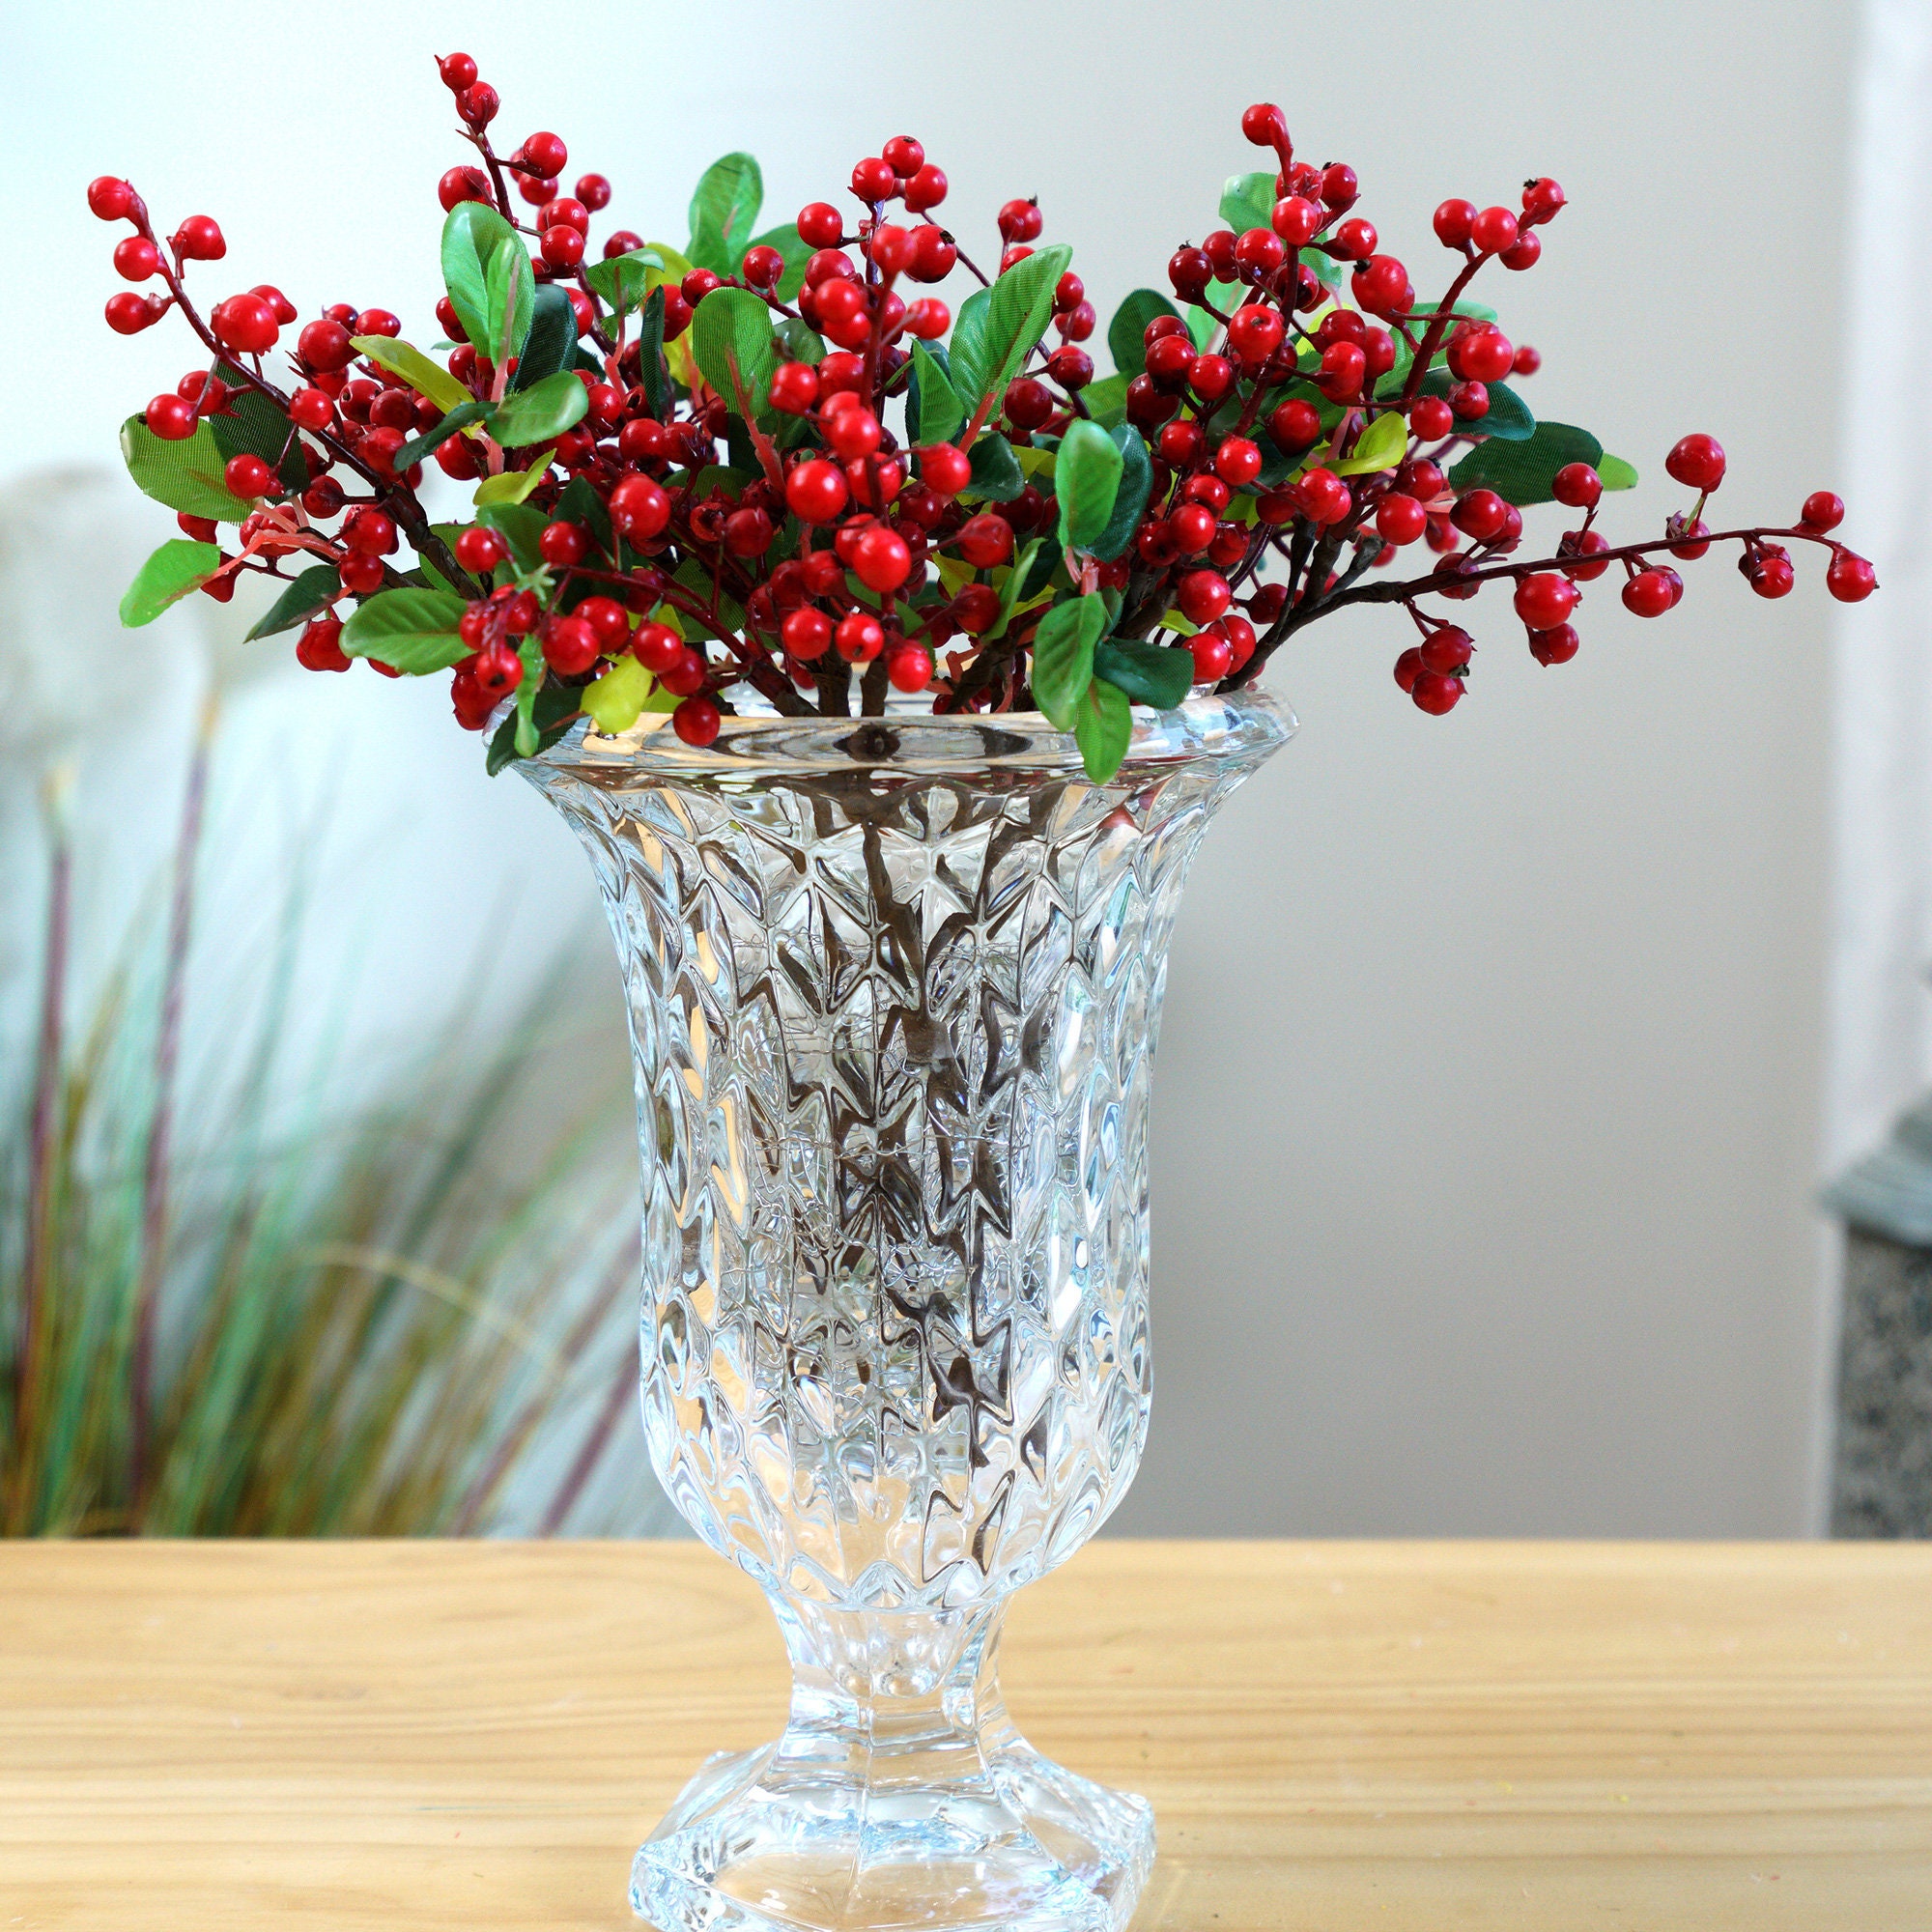 Festive Joyful Artificial Holly Red Berry Stems for the Holidays: Set –  FiveSeasonStuff